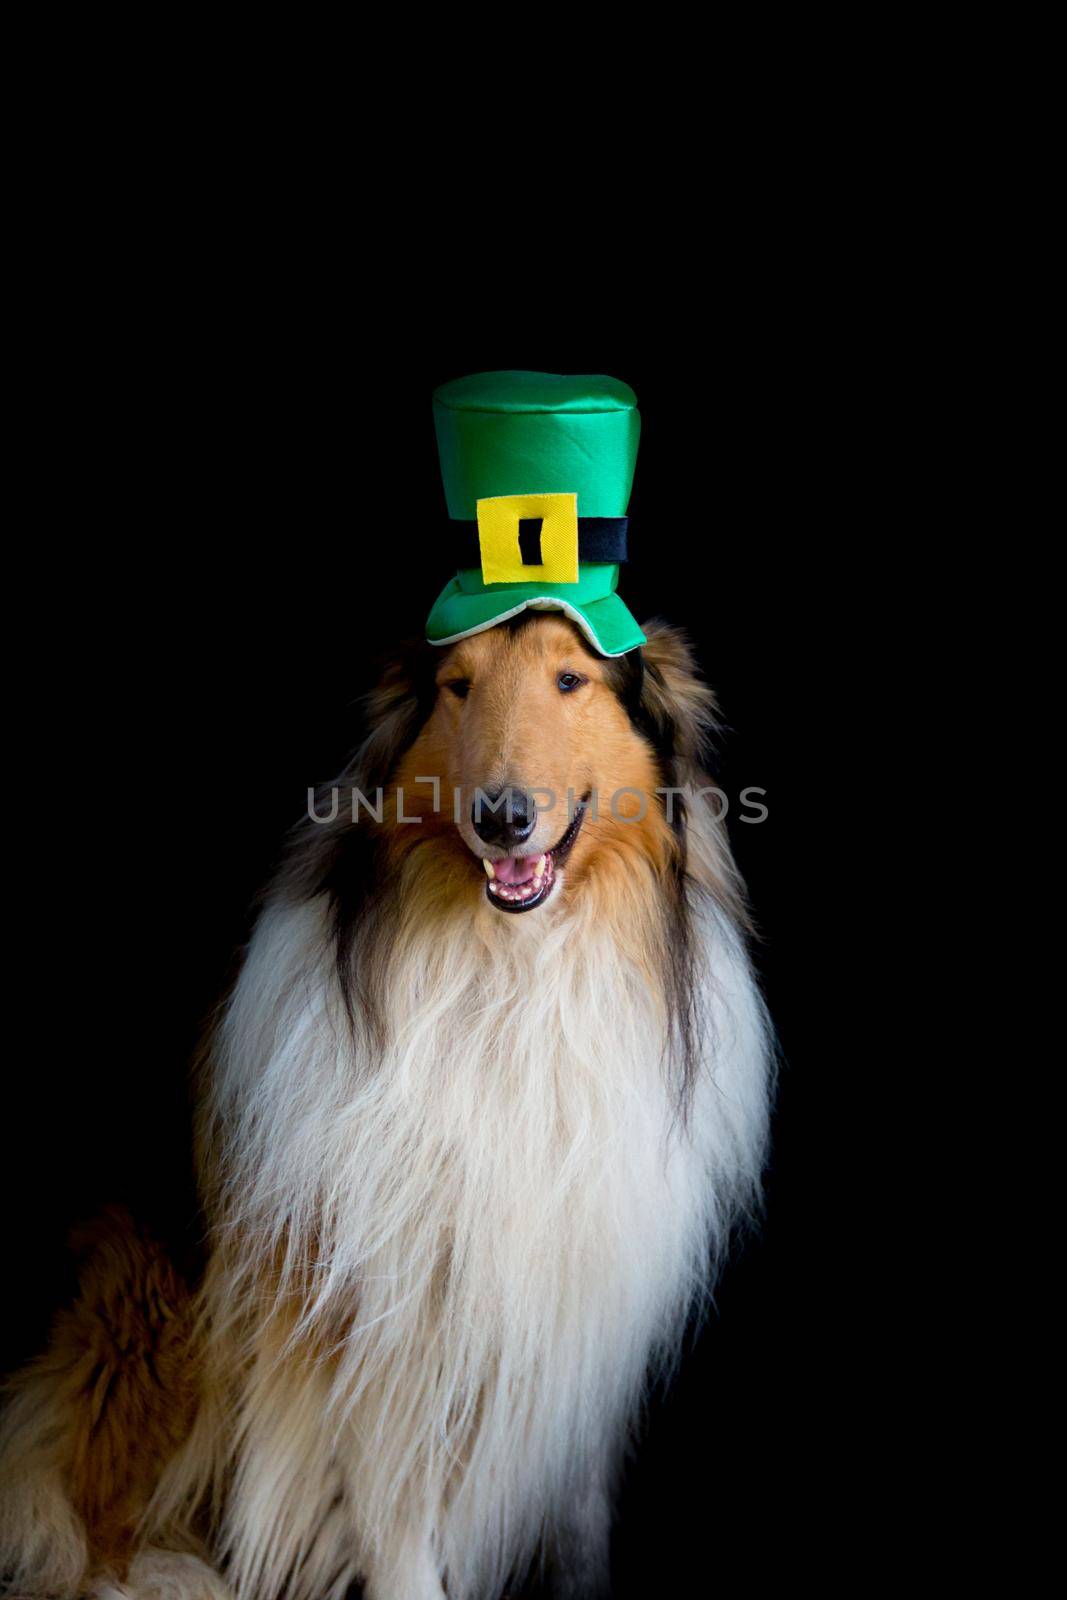 portrait of a Rough Collie dog with saint patrick's day top hat by GabrielaBertolini